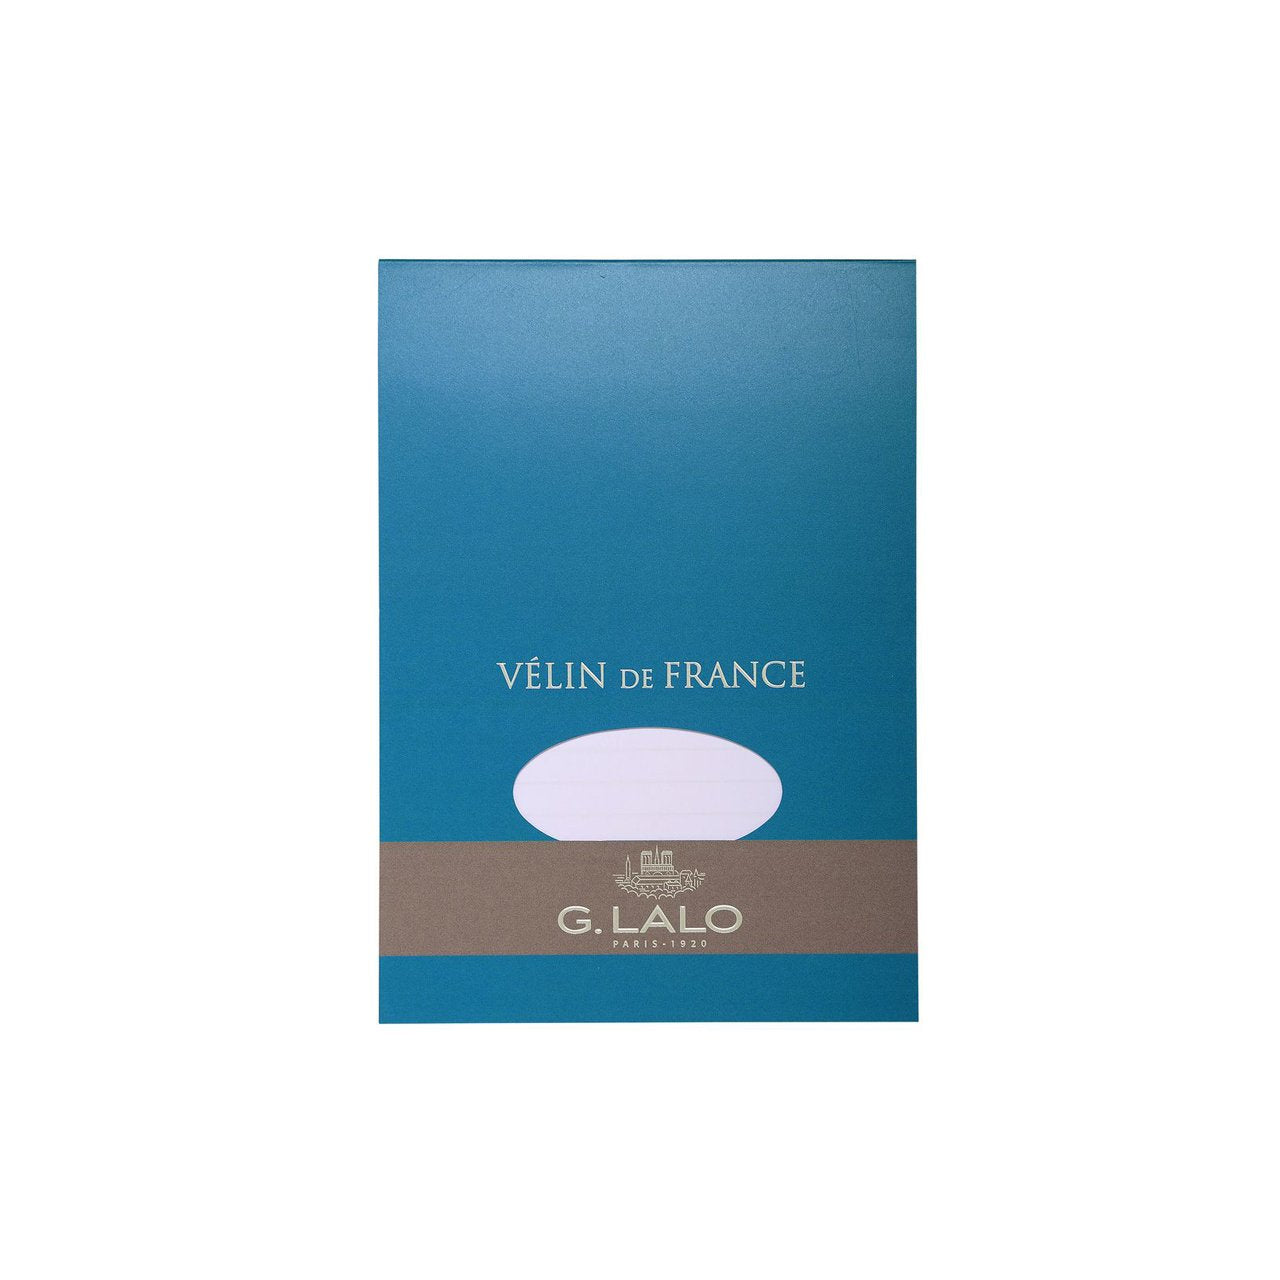 G. Lalo Velin De France Writing Block - A5 White